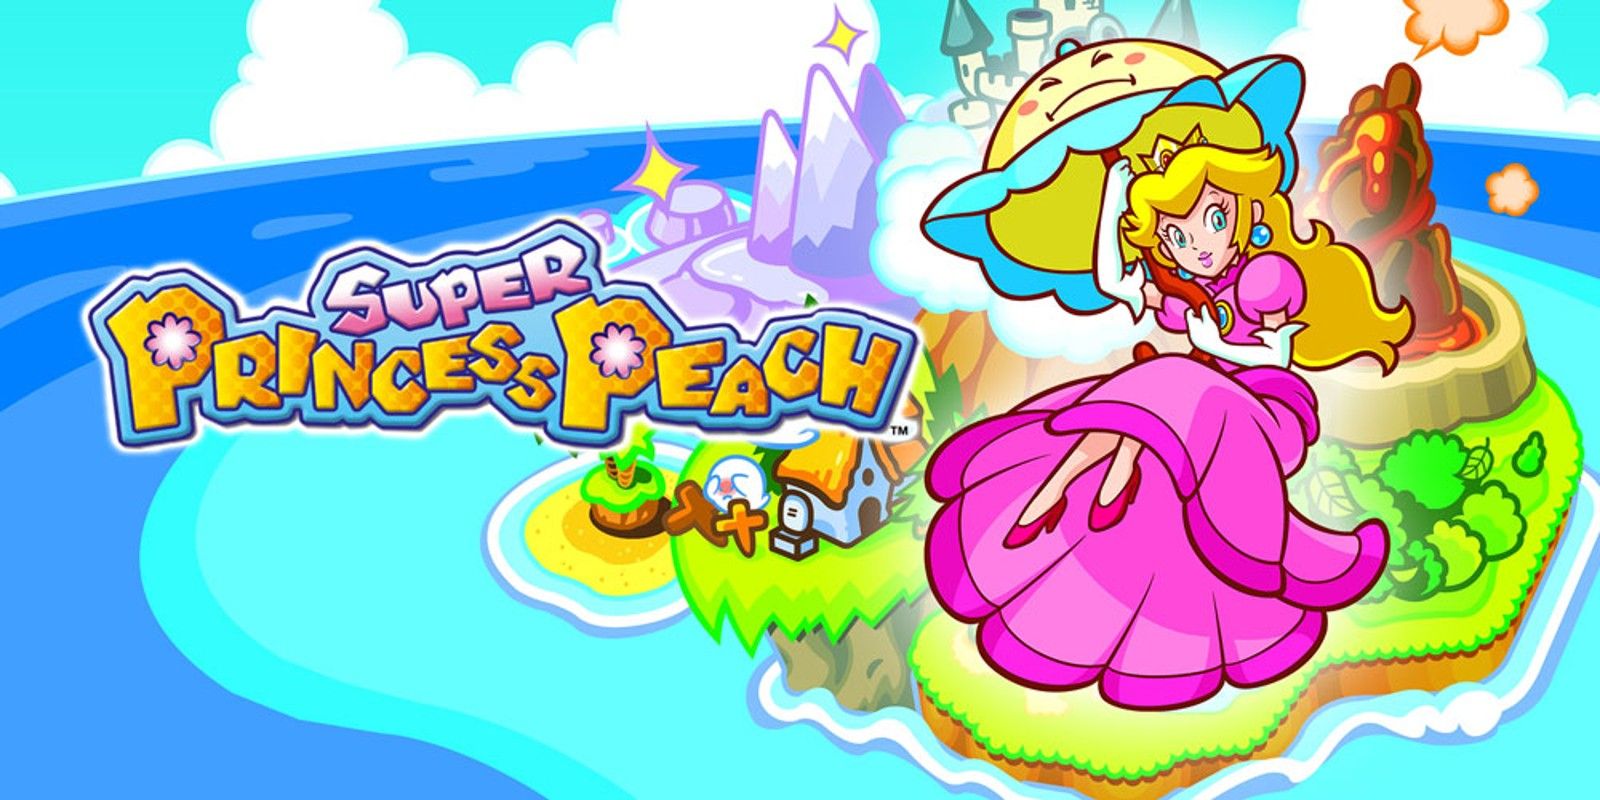 Princess Peach and Perry from Super Princess Peach